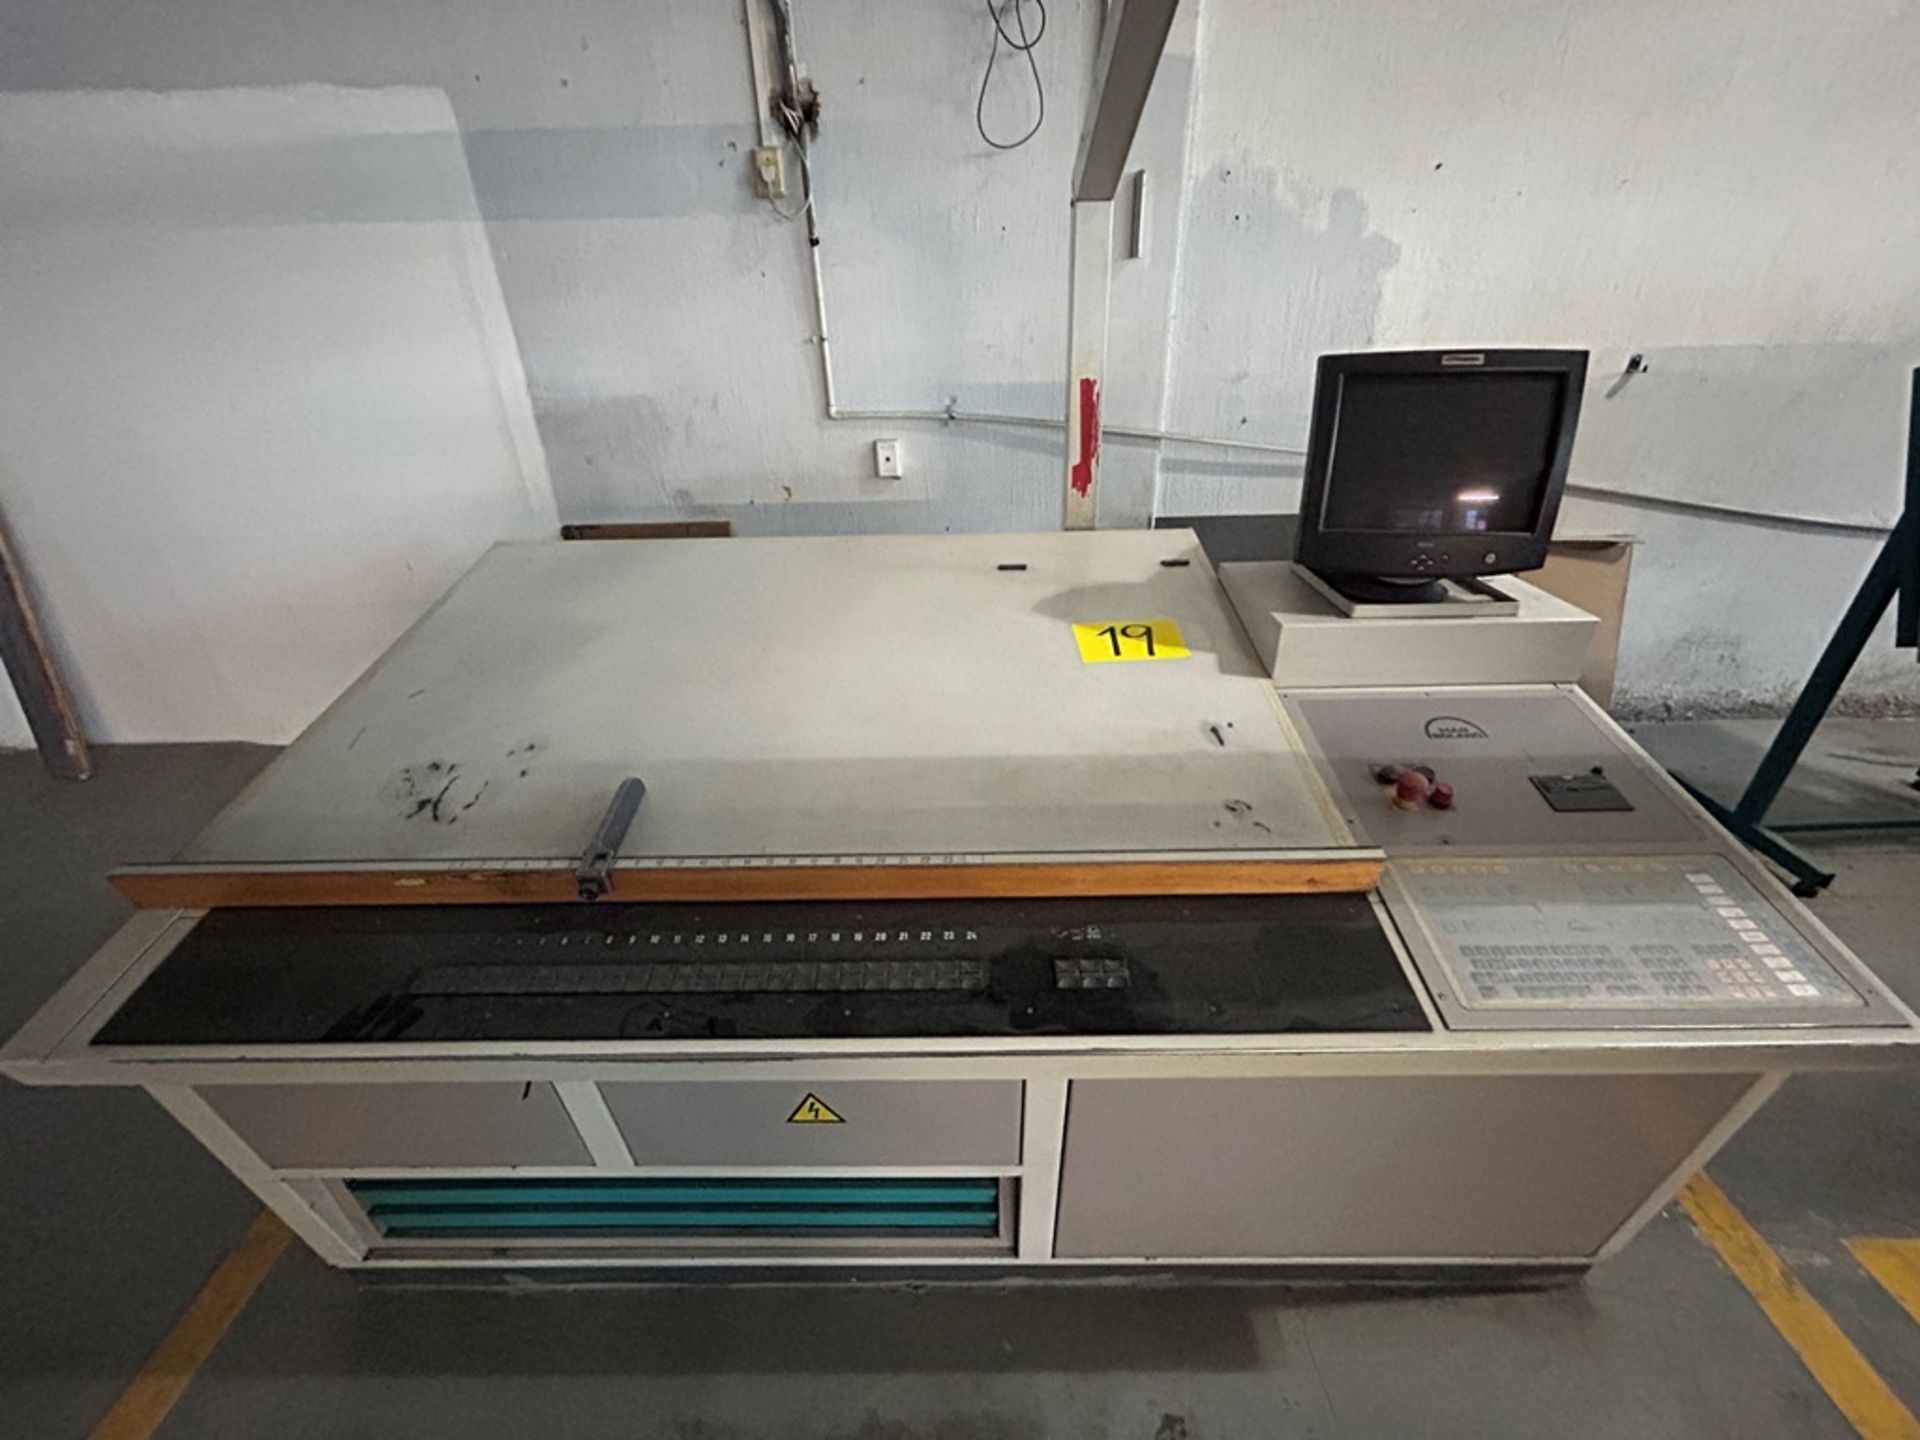 MAN ROLAND Printing Machine (Flatbed Press), Model R305 N 5/0 1/4, Serial No. 28605B, Year 2000, 22 - Image 12 of 16